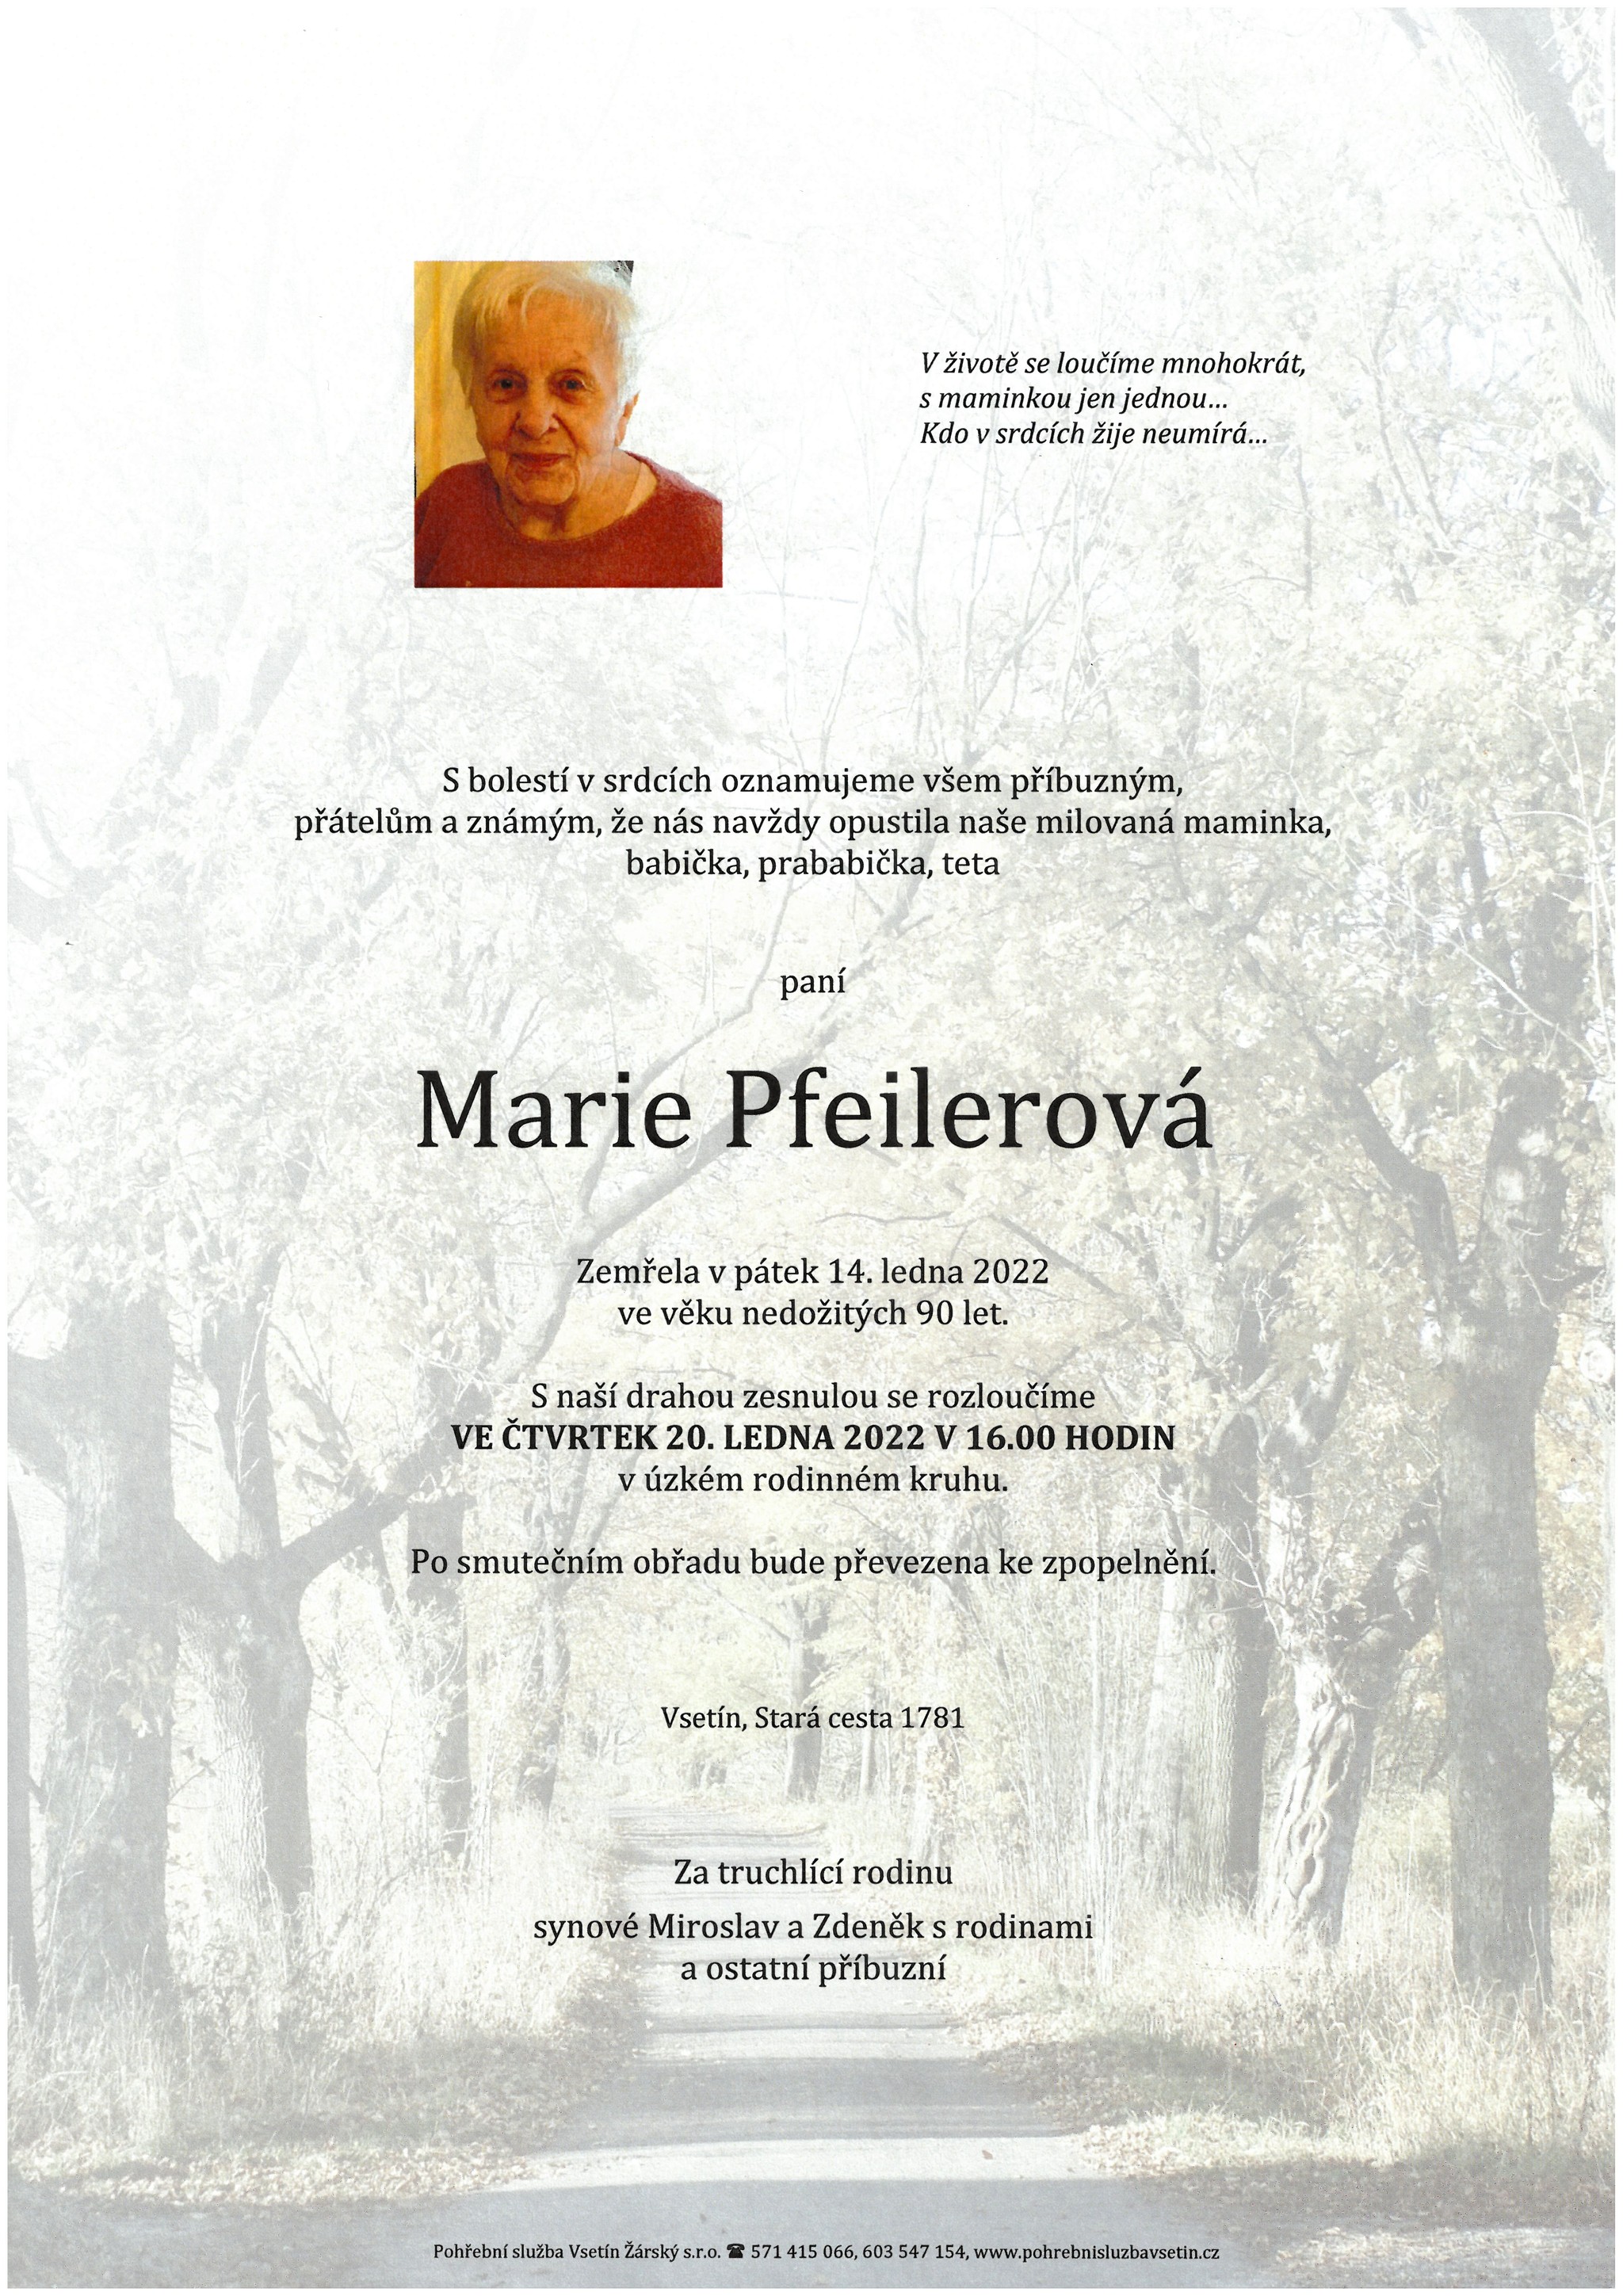 Marie Pfeilerová